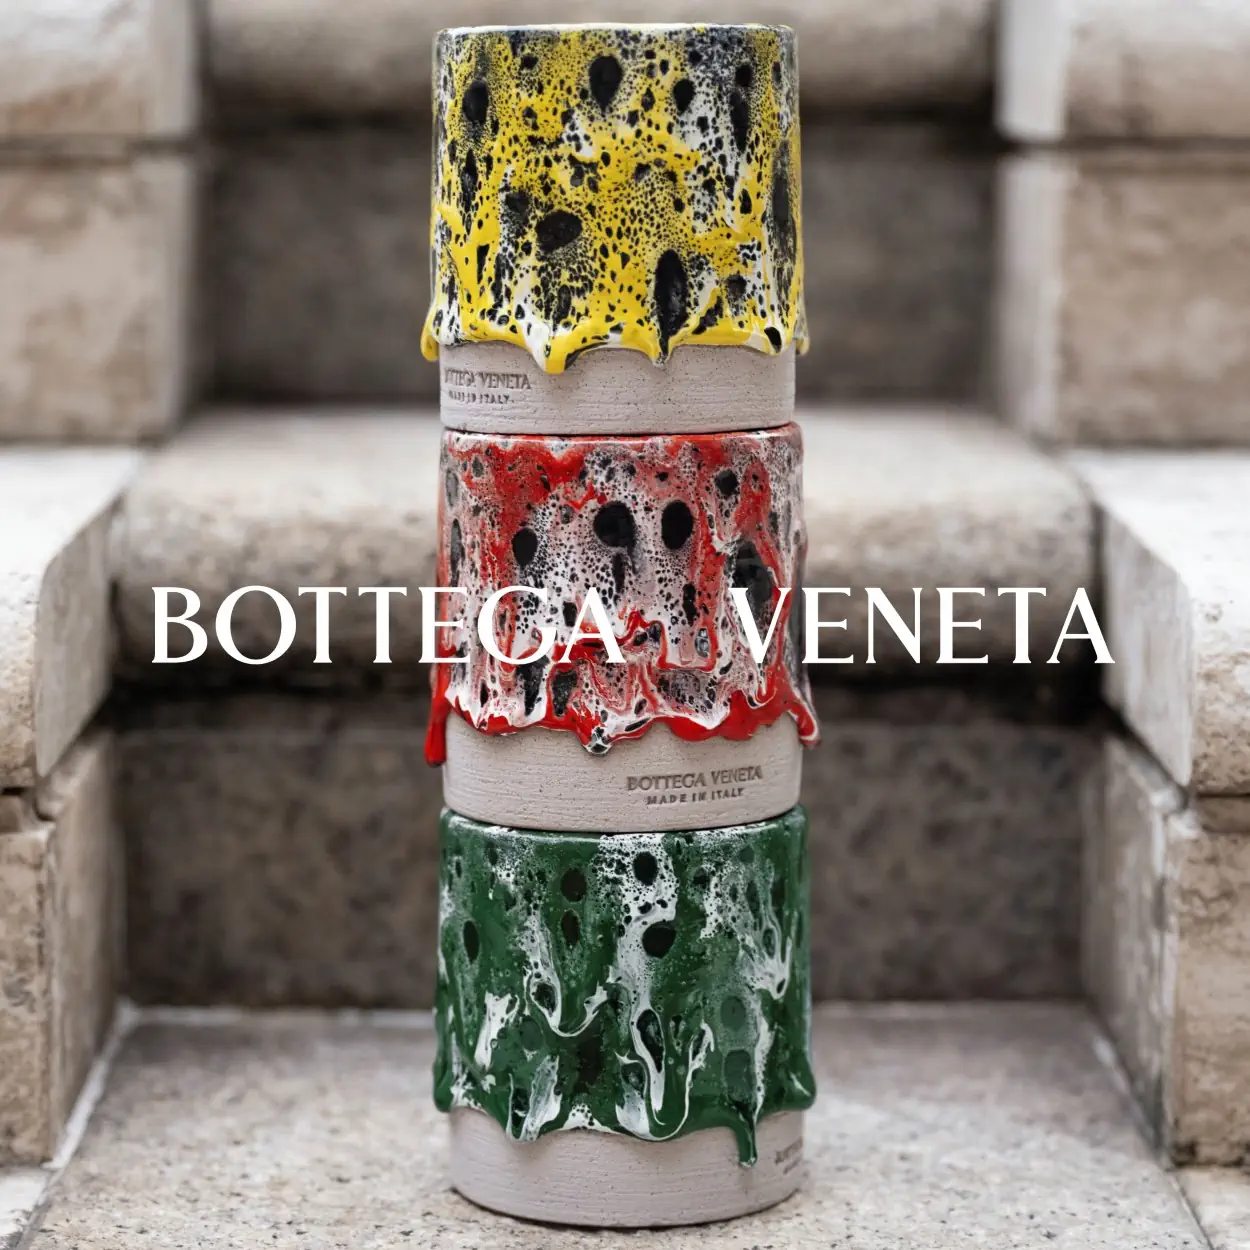 Bottega Veneta unveils exquisite scented candles in handcrafted Italian clay pots